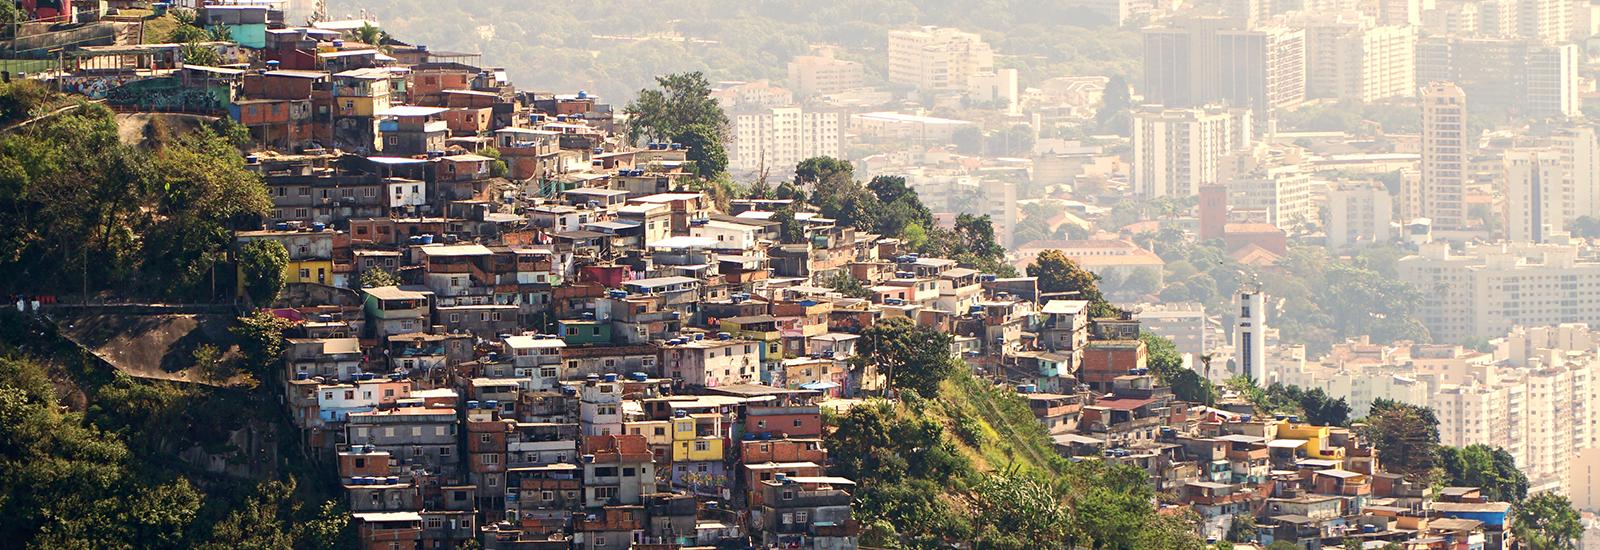 Stock photo - Brazilian favelas